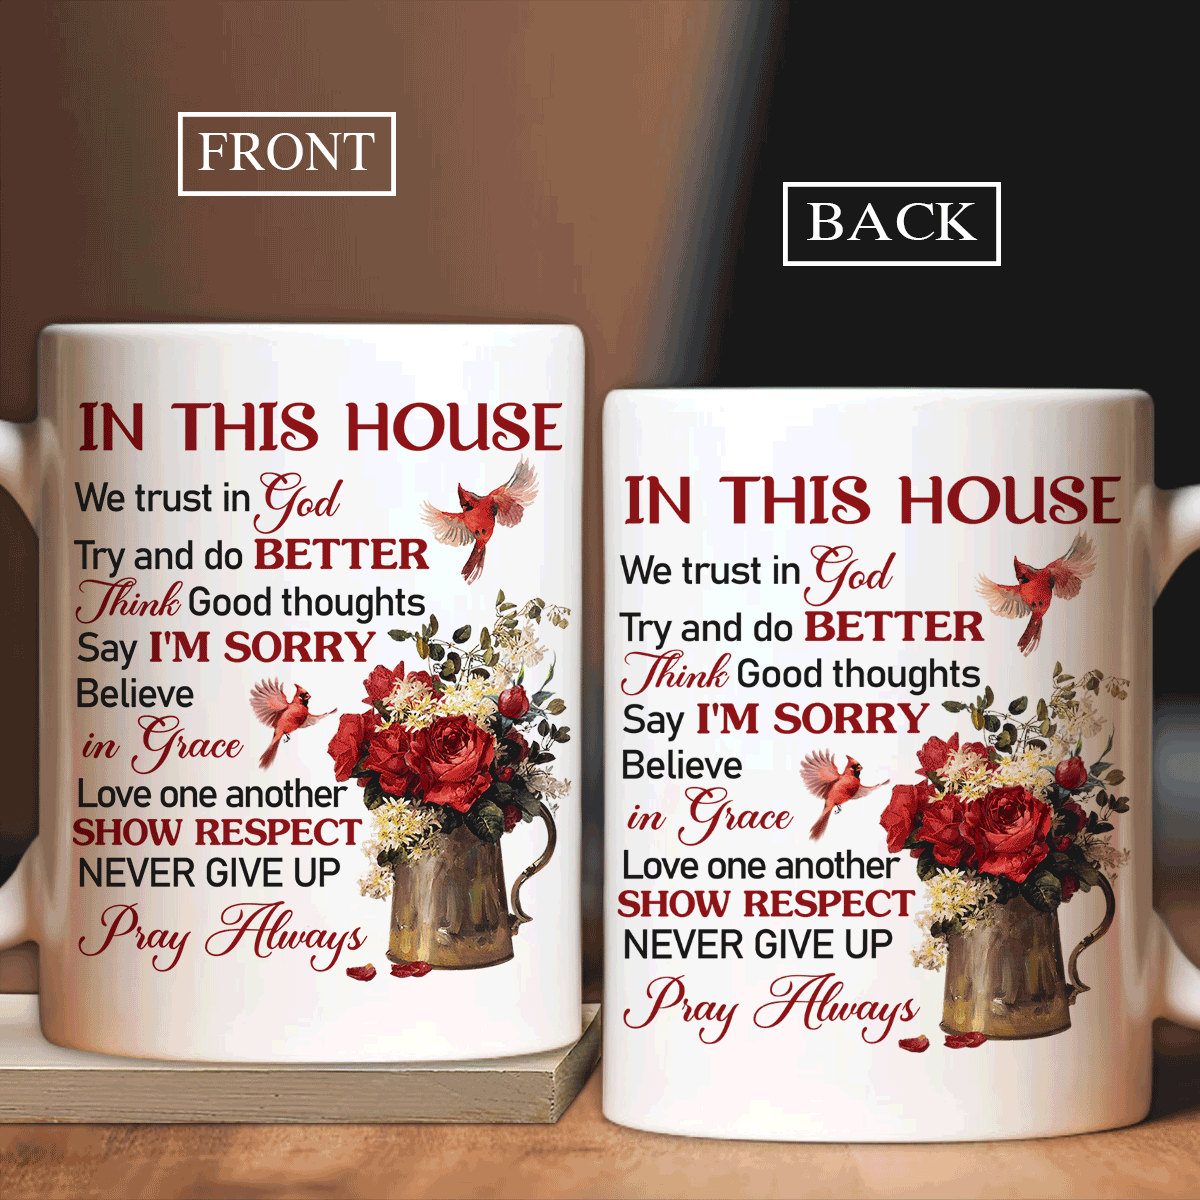 Jesus White Mug, Christian Mug Gift, Religious Tea Cup, Faith Mug - Red Rose Flower, Cardinal Drawing, In This House, We Trust In God